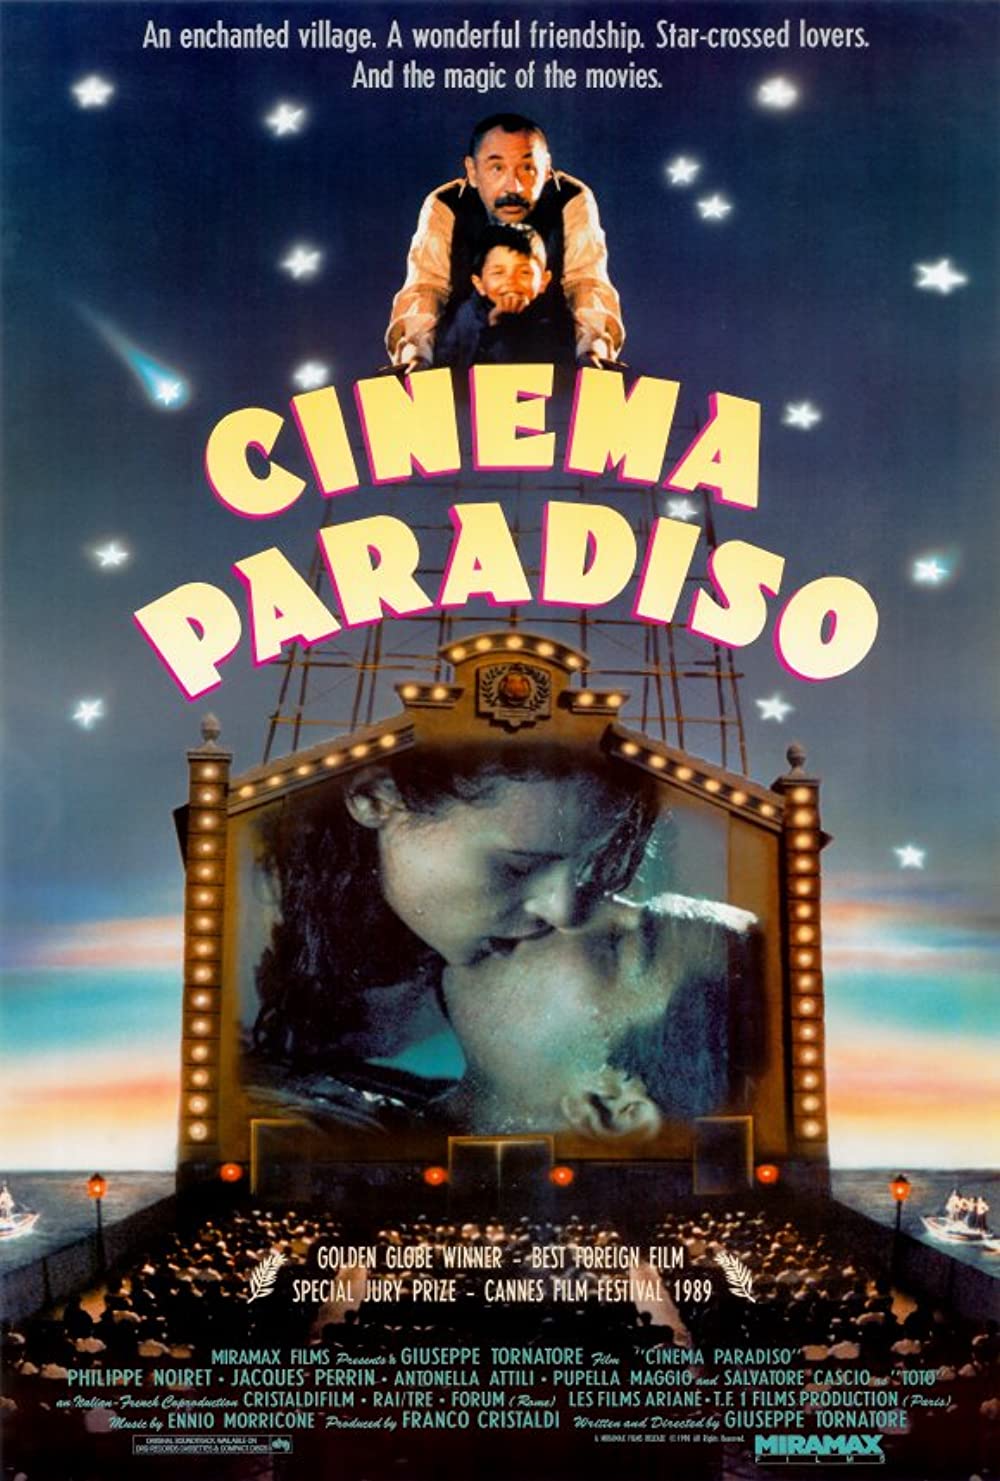 Filmbeschreibung zu Cinema Paradiso (OV)